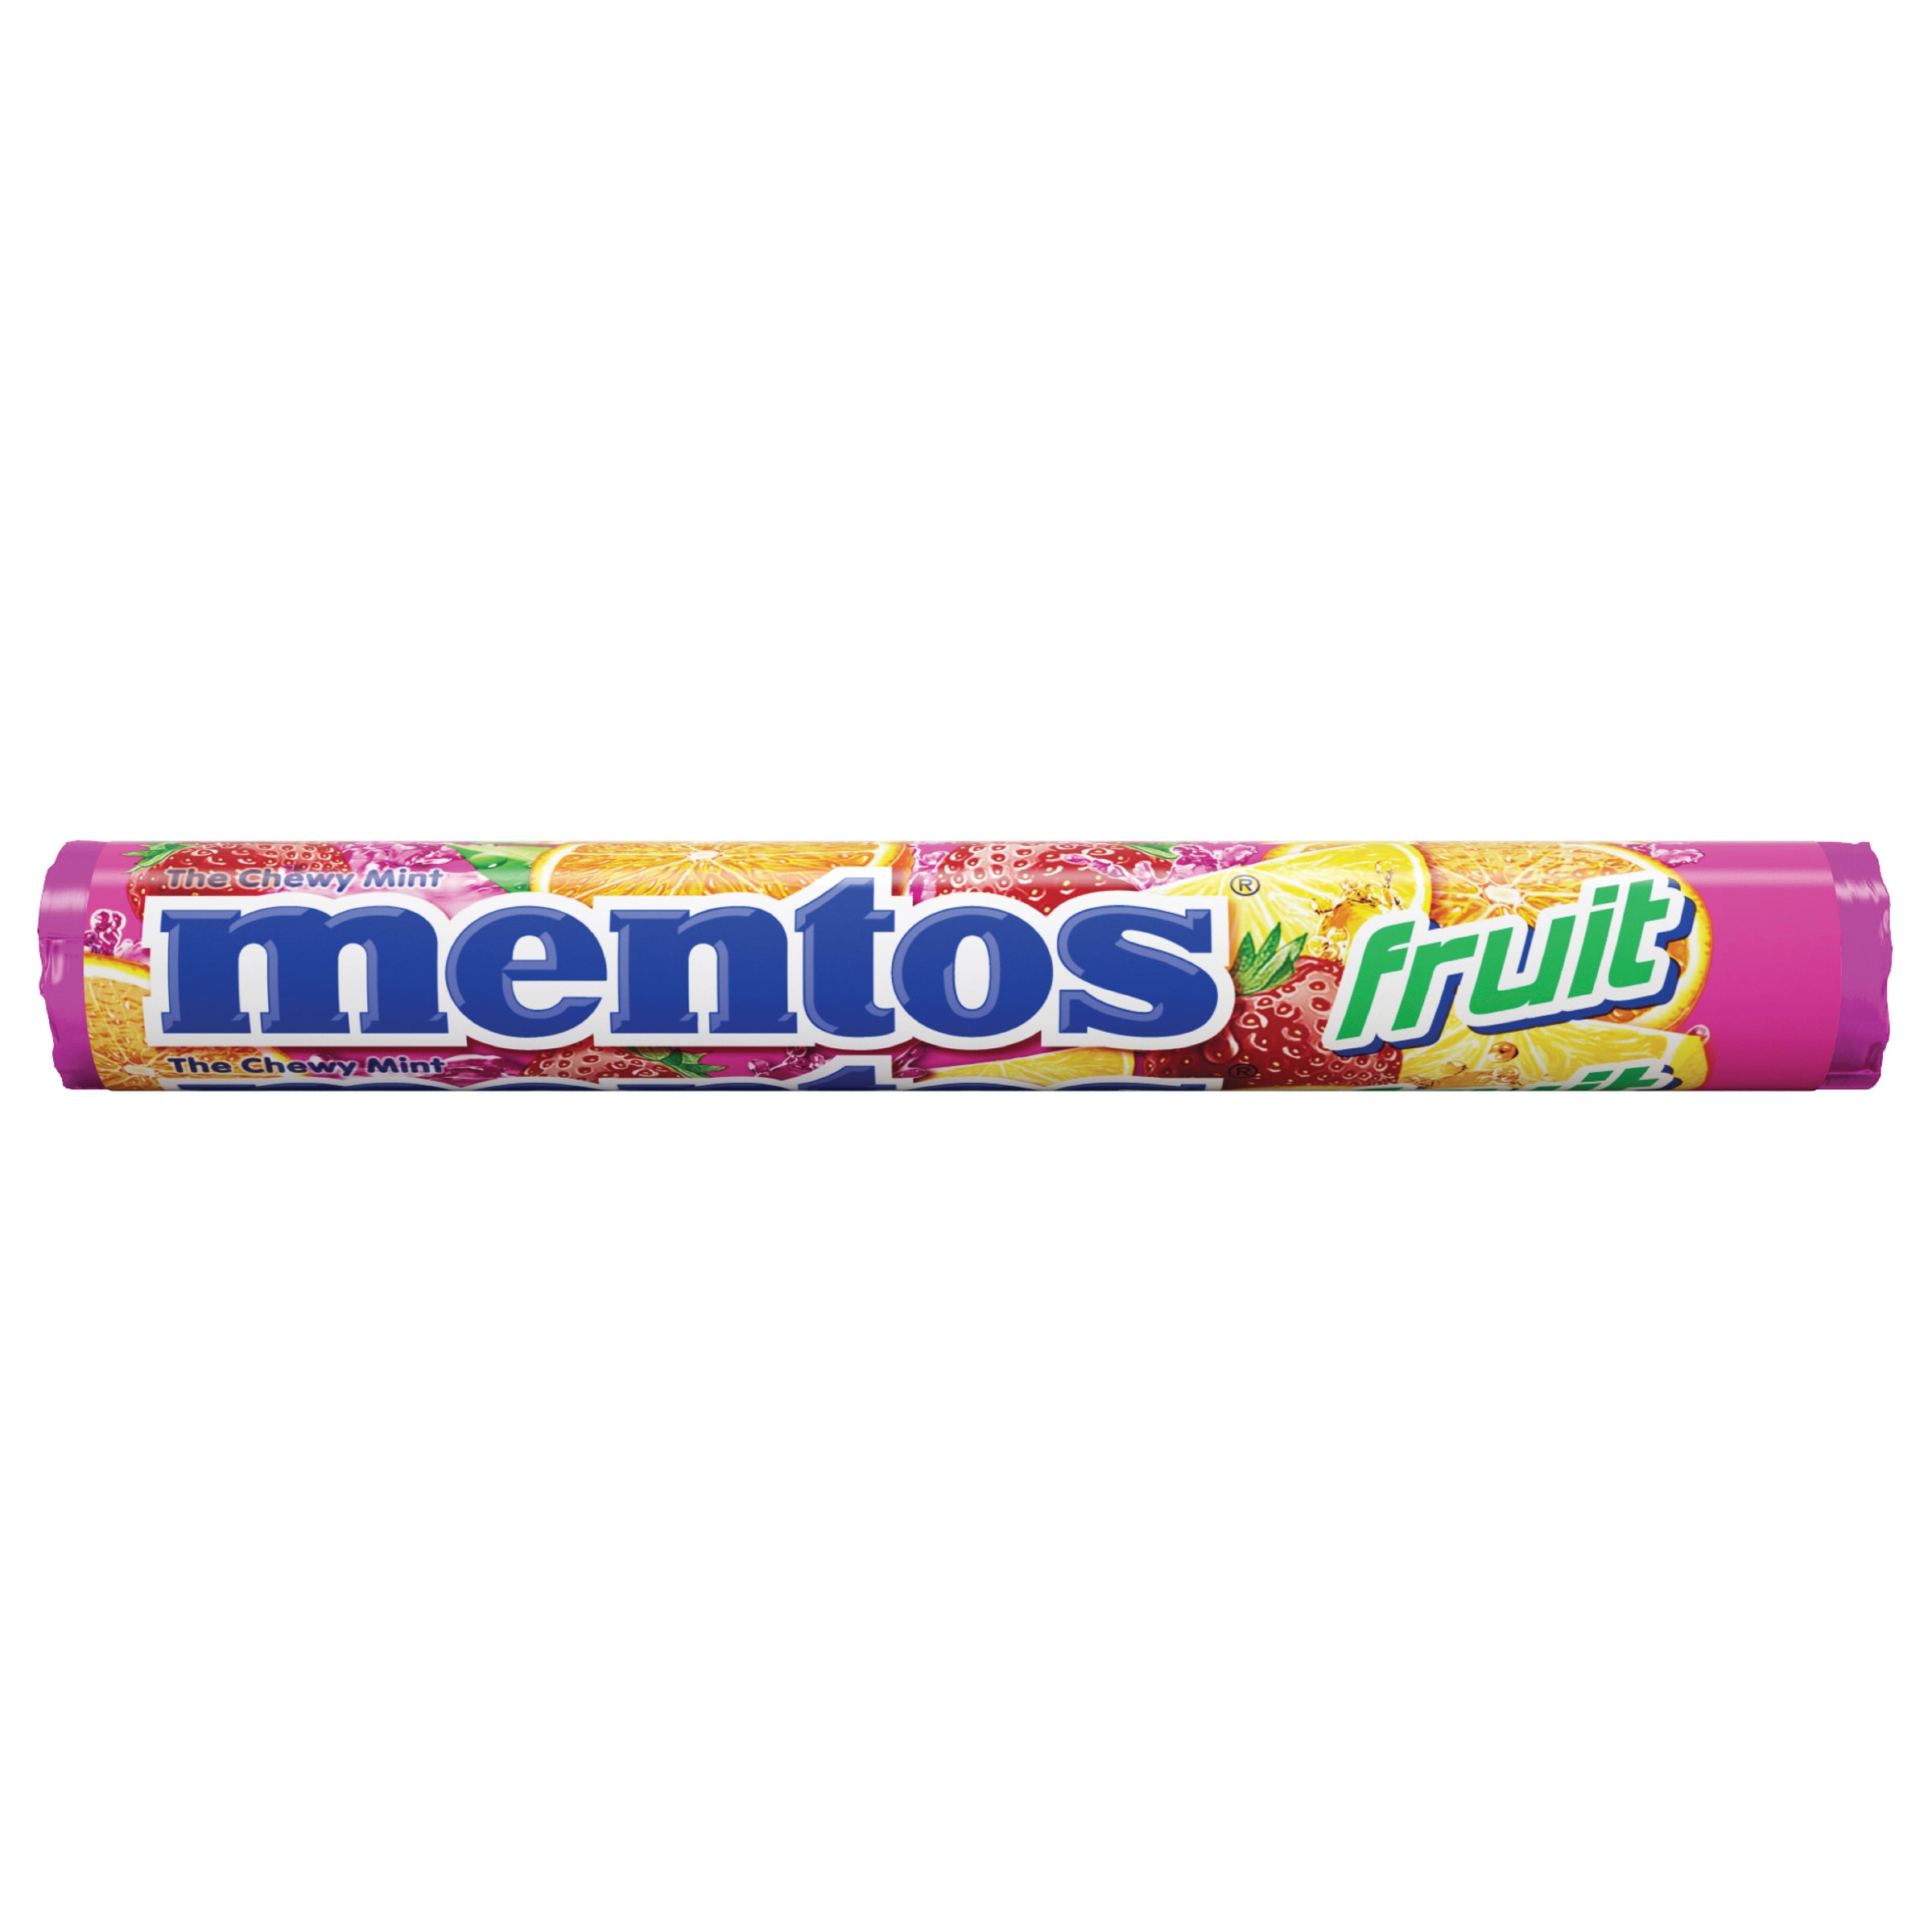 MENTOS - FRUIT